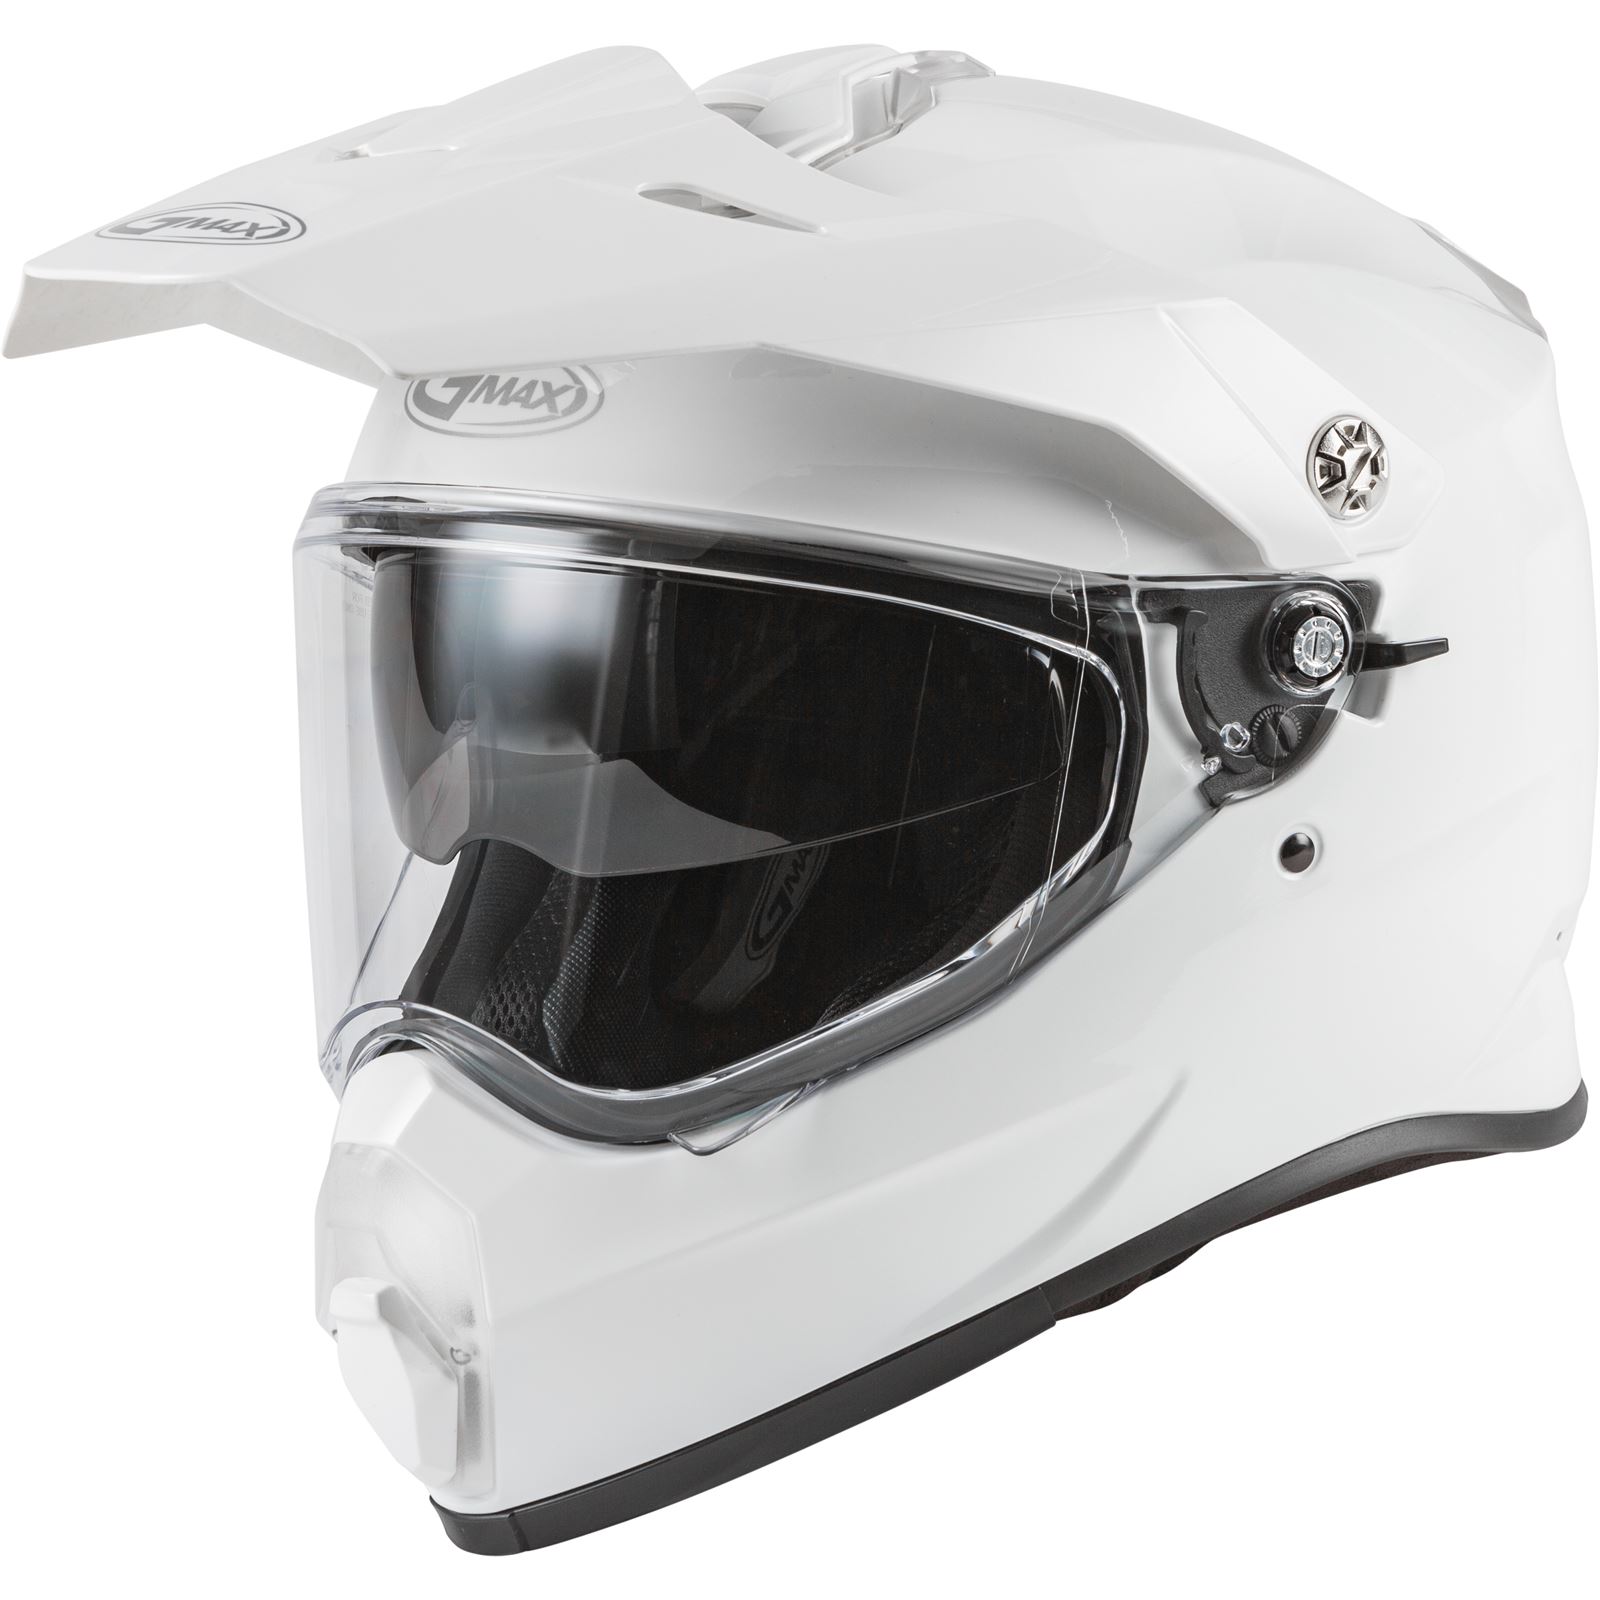 GMax AT-21 Adventure Helmet